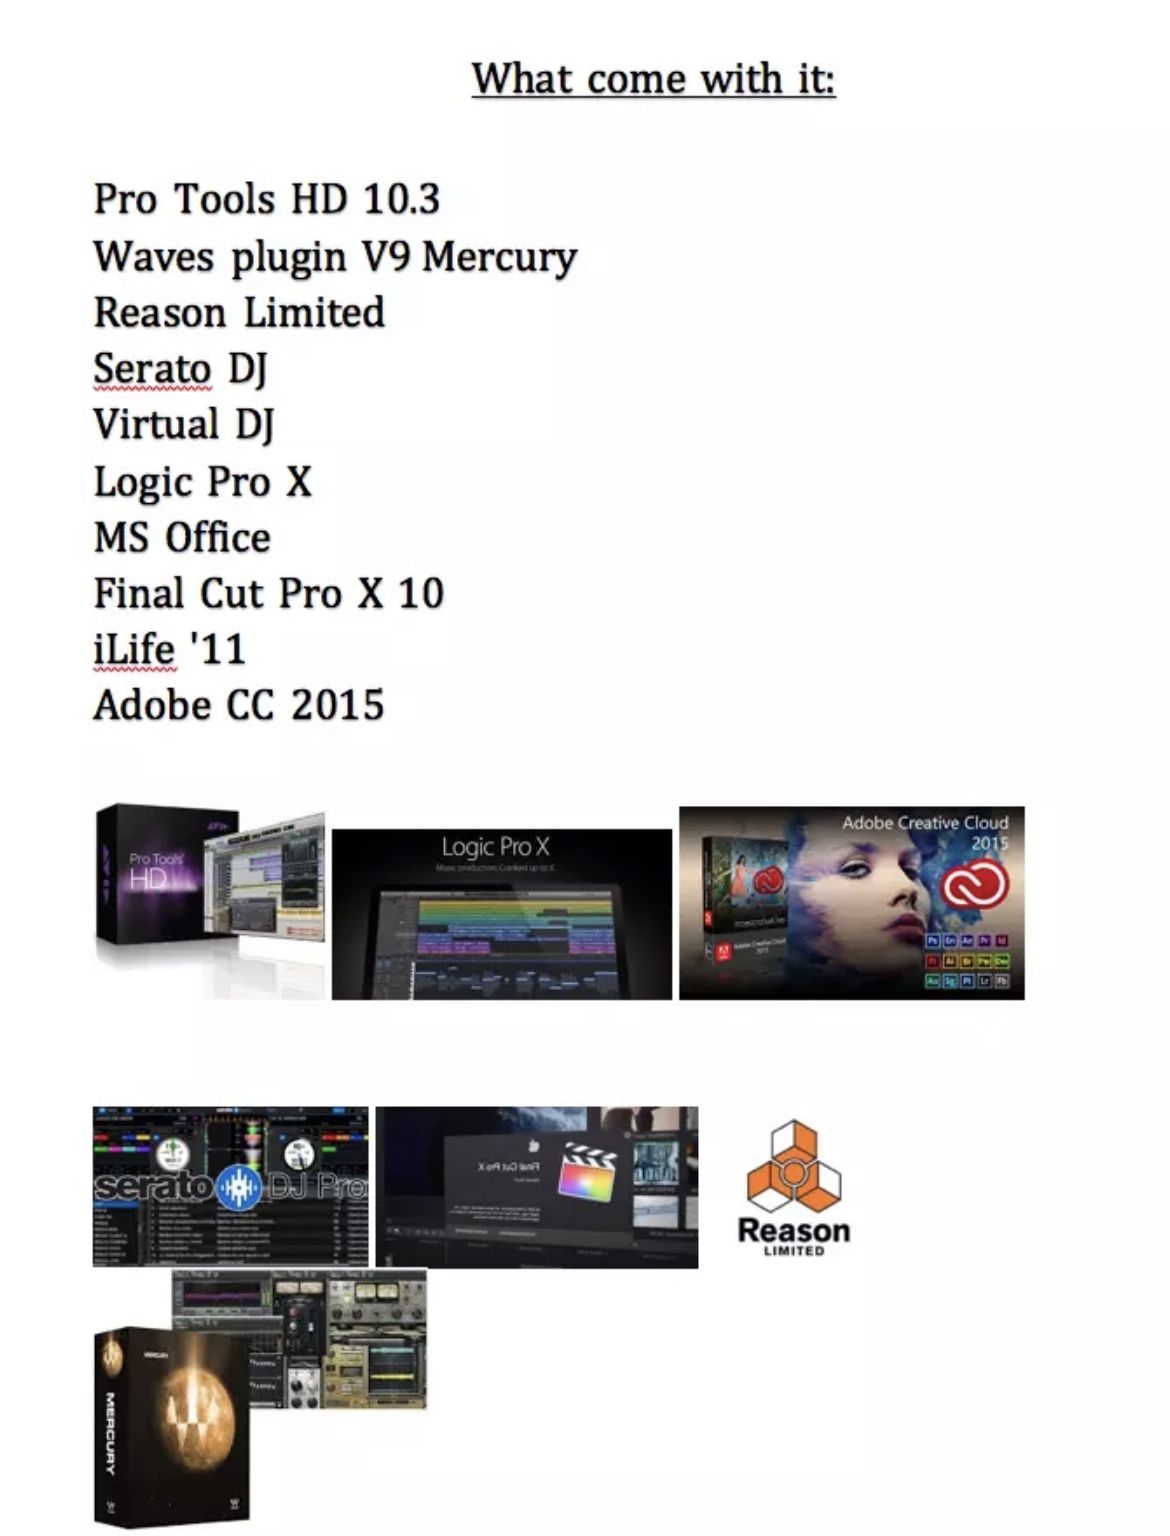 Apple Mac Pro 2008 8-Cores - 16gb Ram ProTools HD-Waves Plugins Package, Adobe